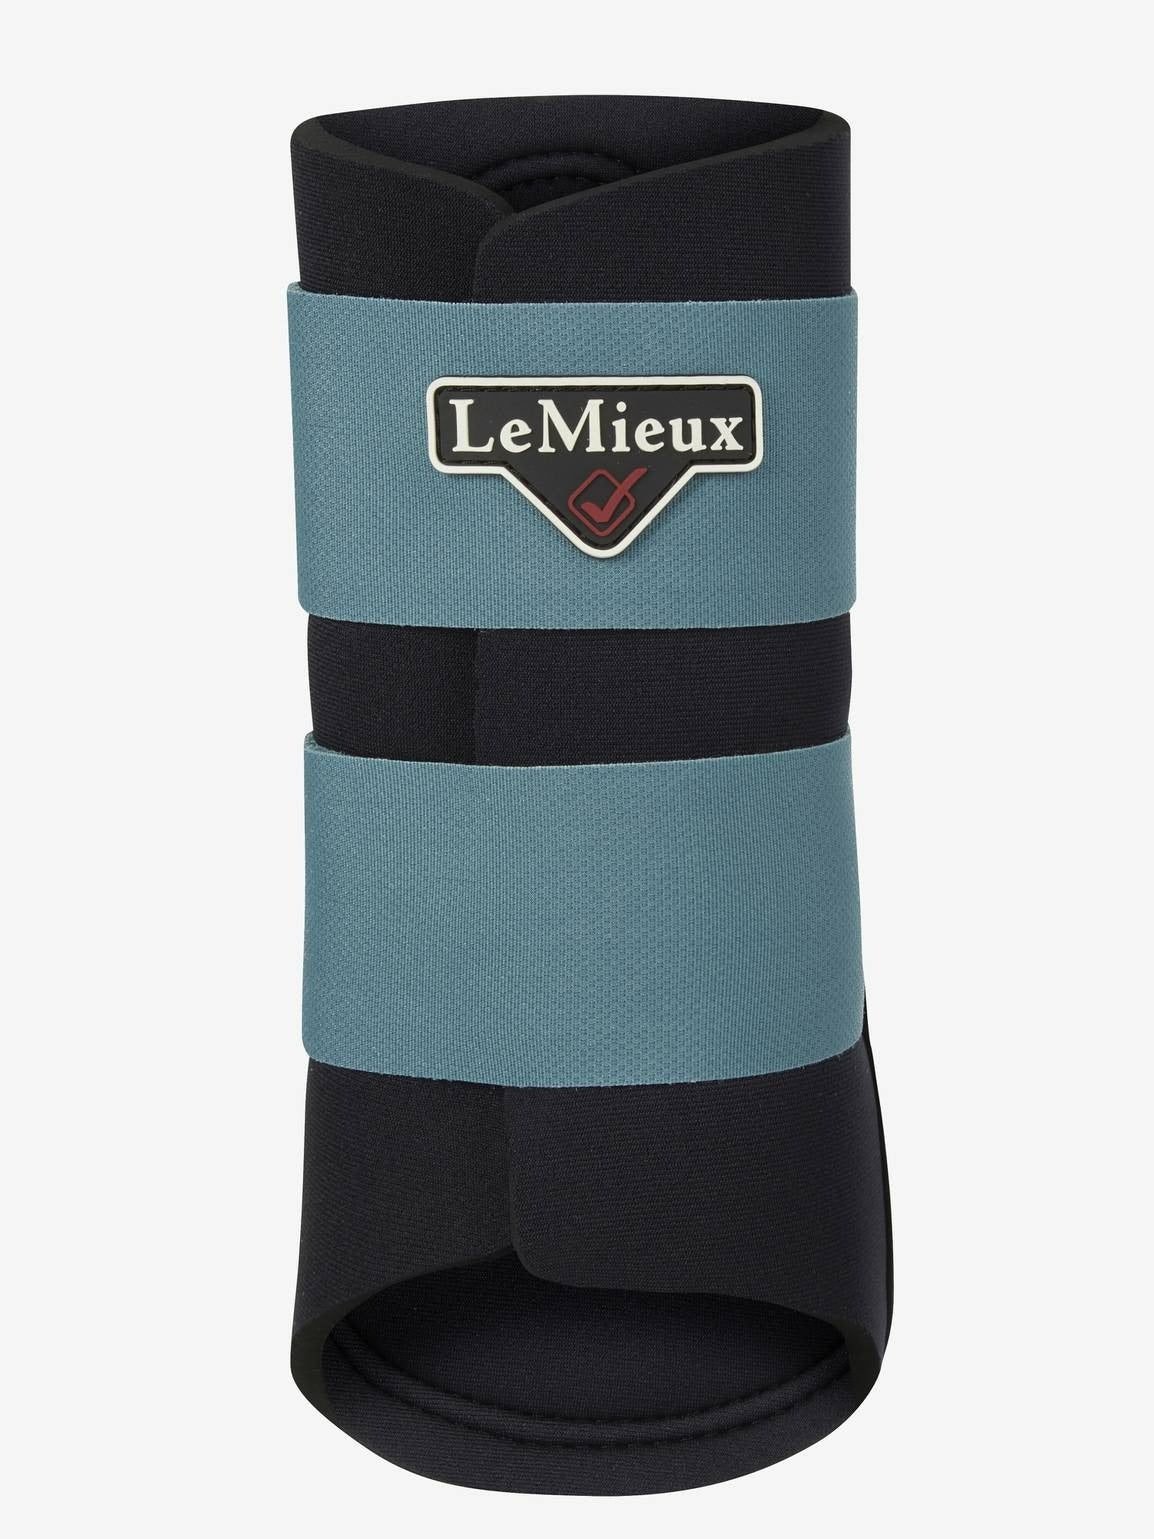 Lemieux Grafter Brushing Boot